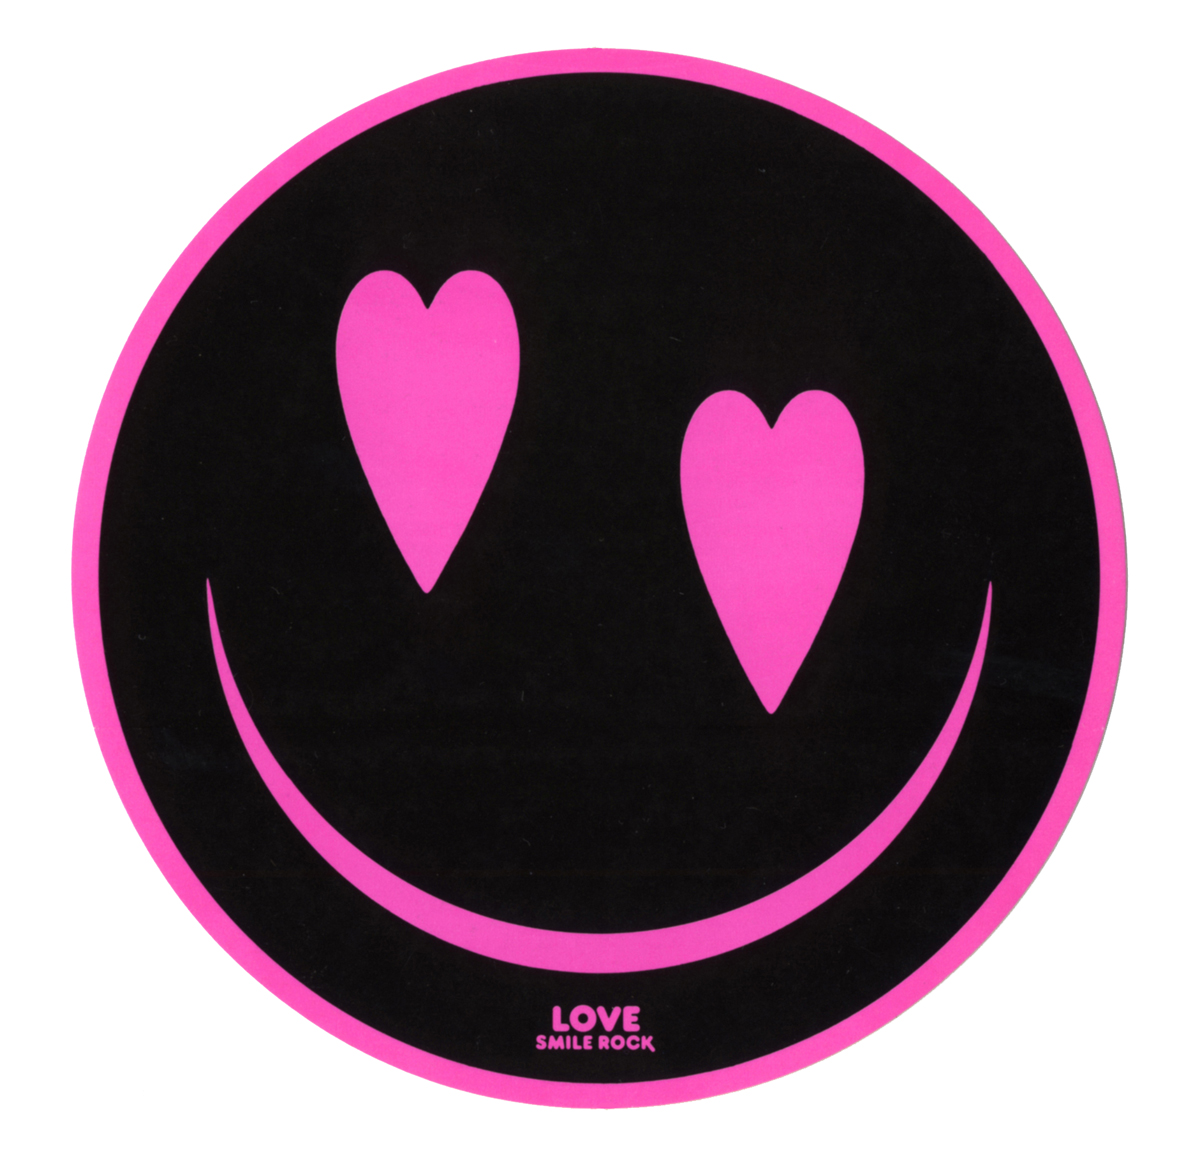 Smile Rock “Smile Rock Logo”